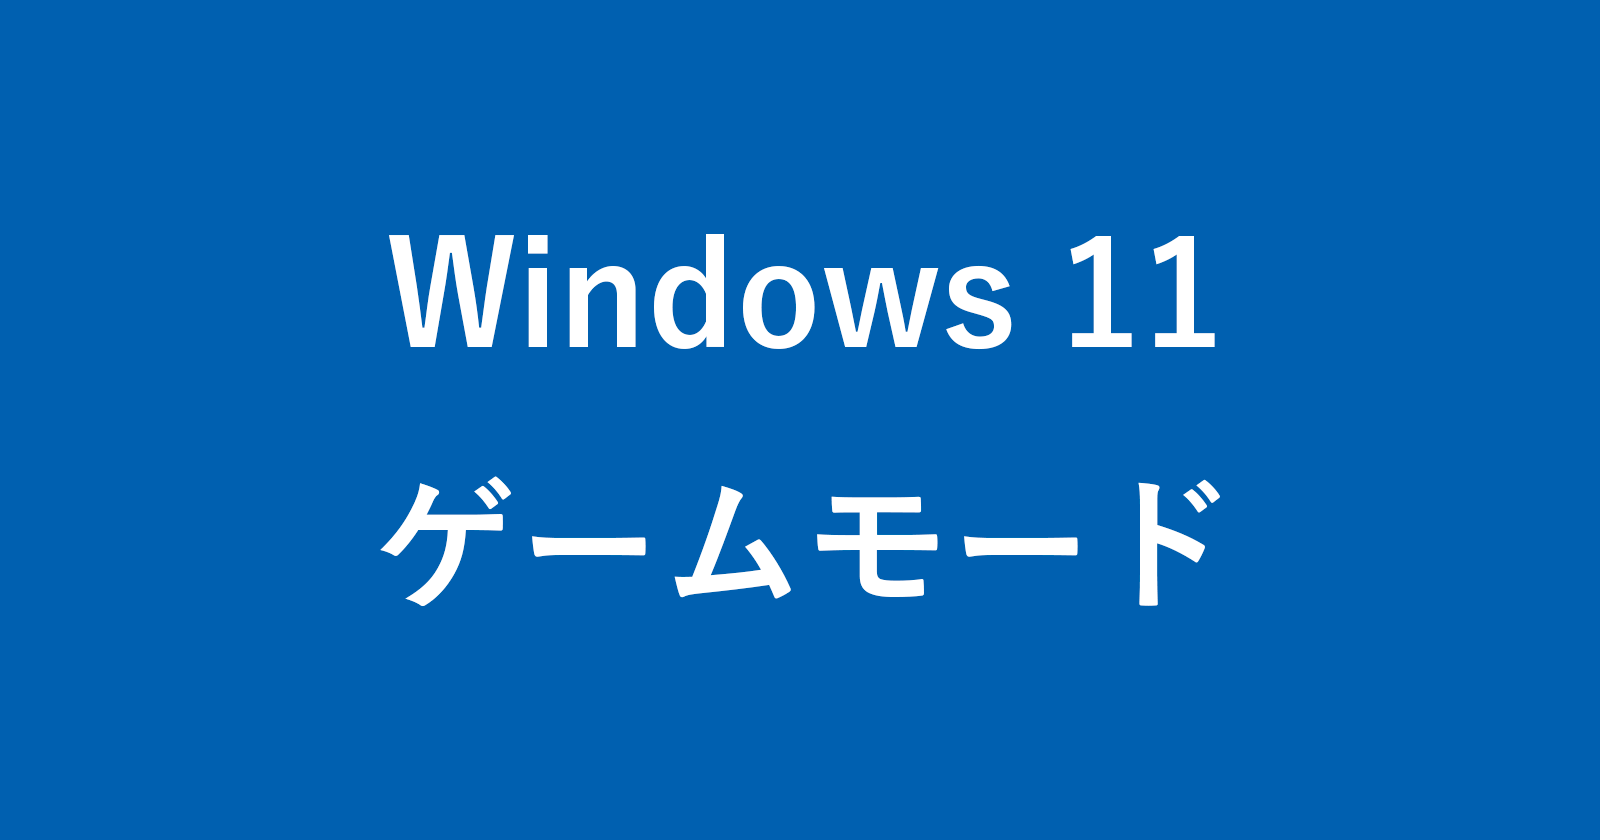 windows 11 game mode